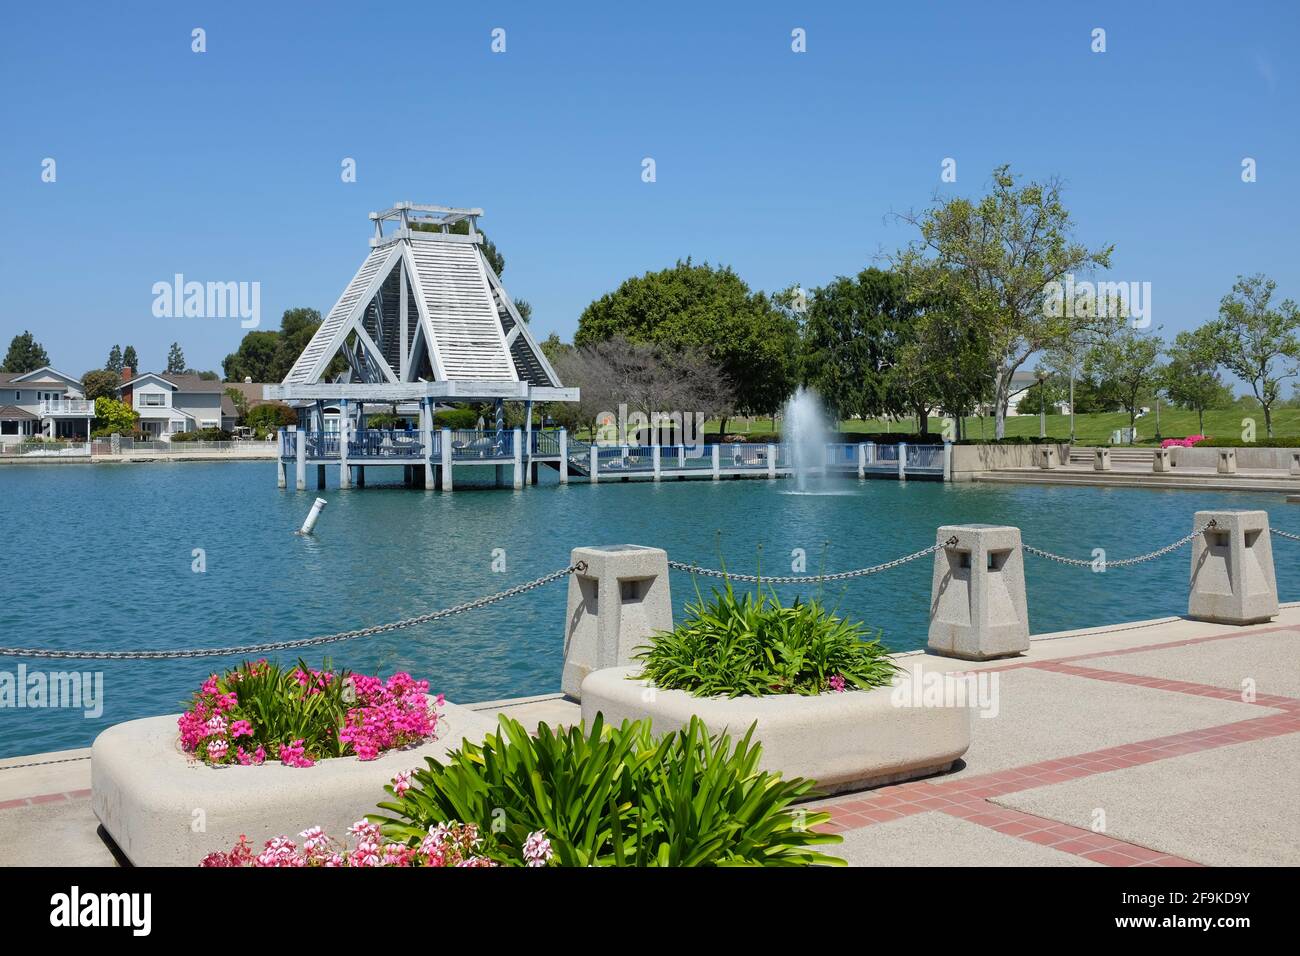 IRVINE, CALIFORNIA - 16 APR 2021: The South Lake Gazebo and fountain in the Woodbridge Village of Irvine. Stock Photo